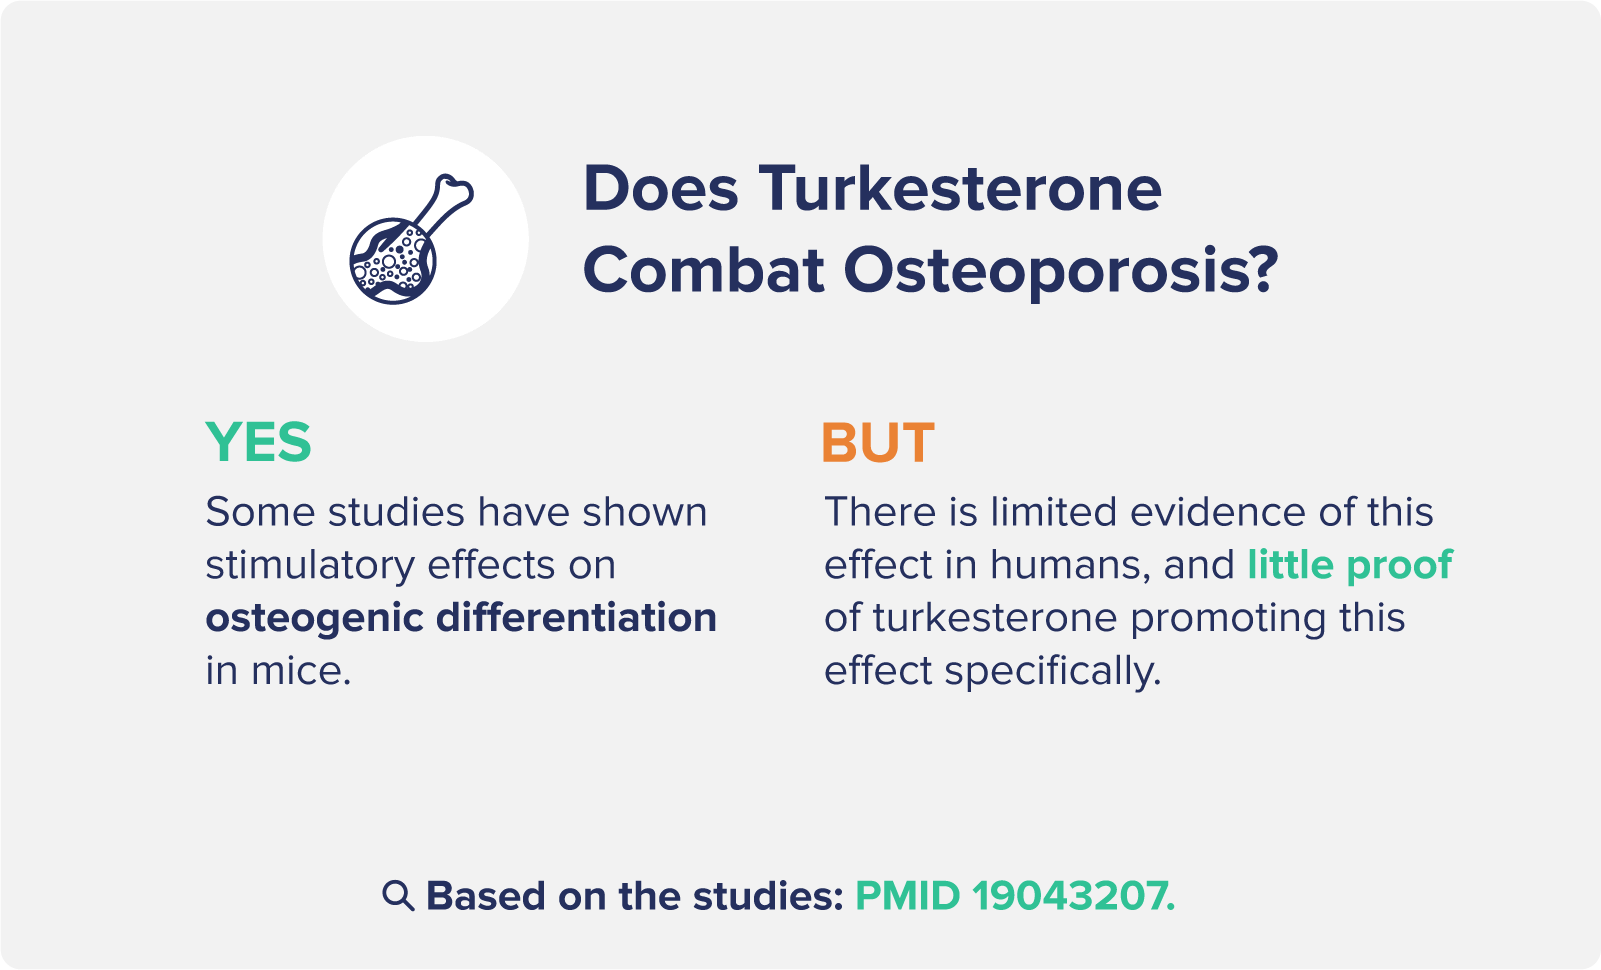 Does Turkesterone Combat Osteoporosis